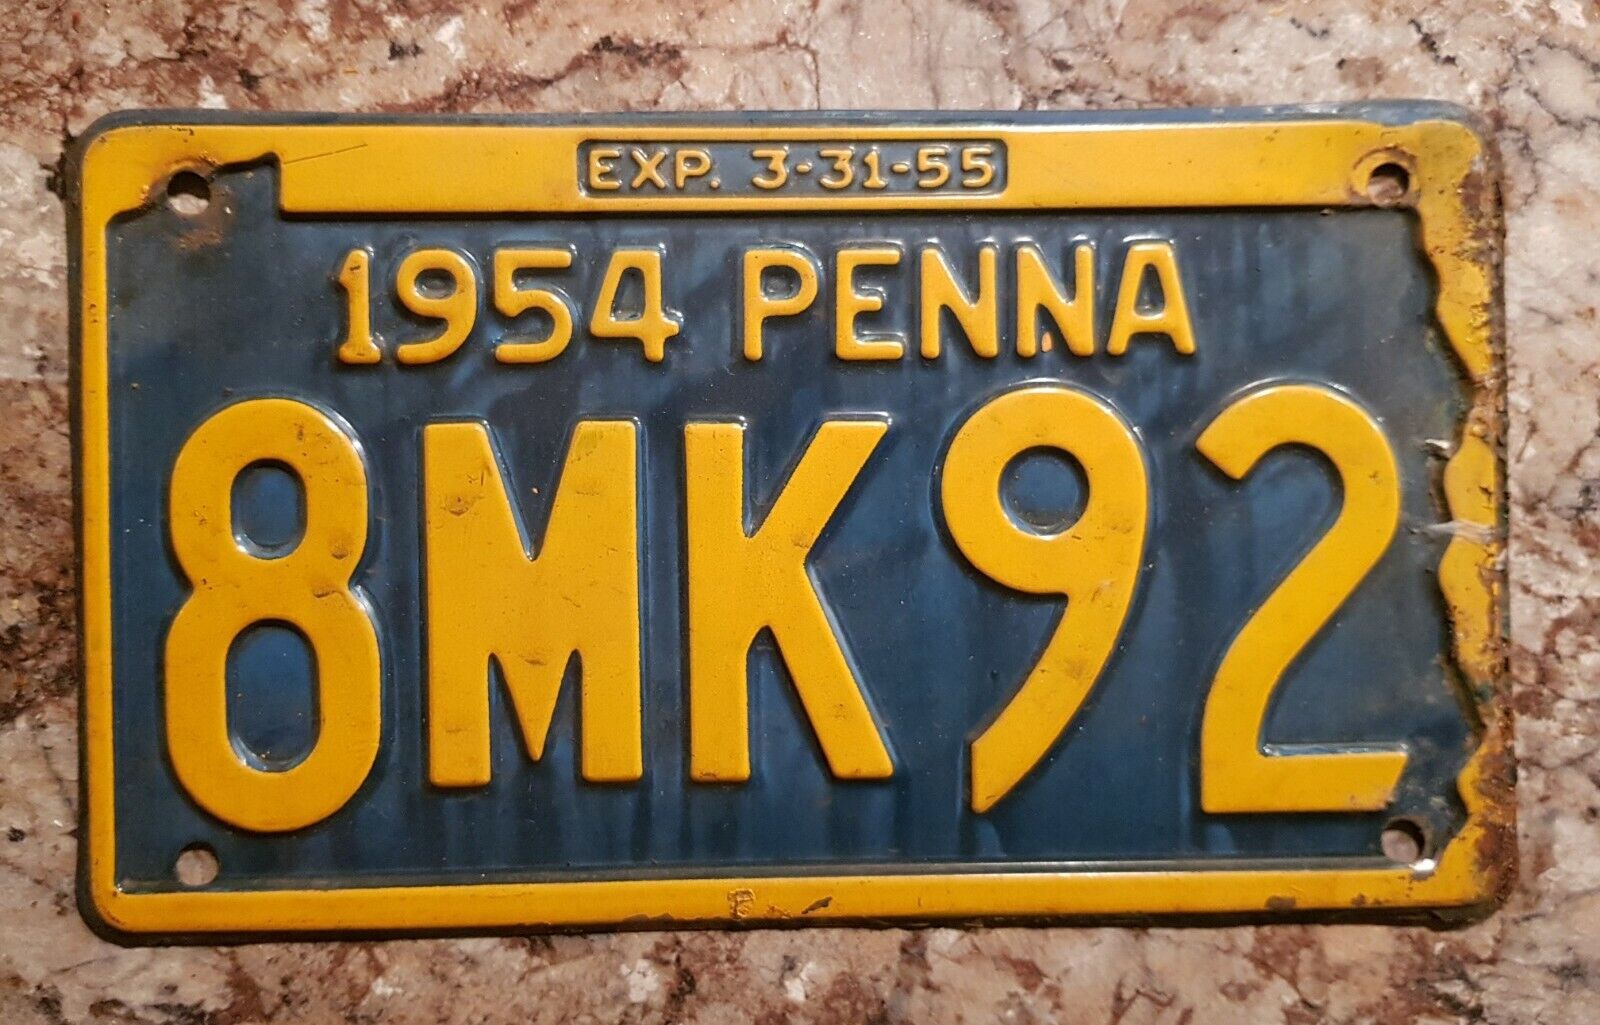 1954 Pennsylvania Penna License Plate 8MK92 Vintage Plate Keystone State